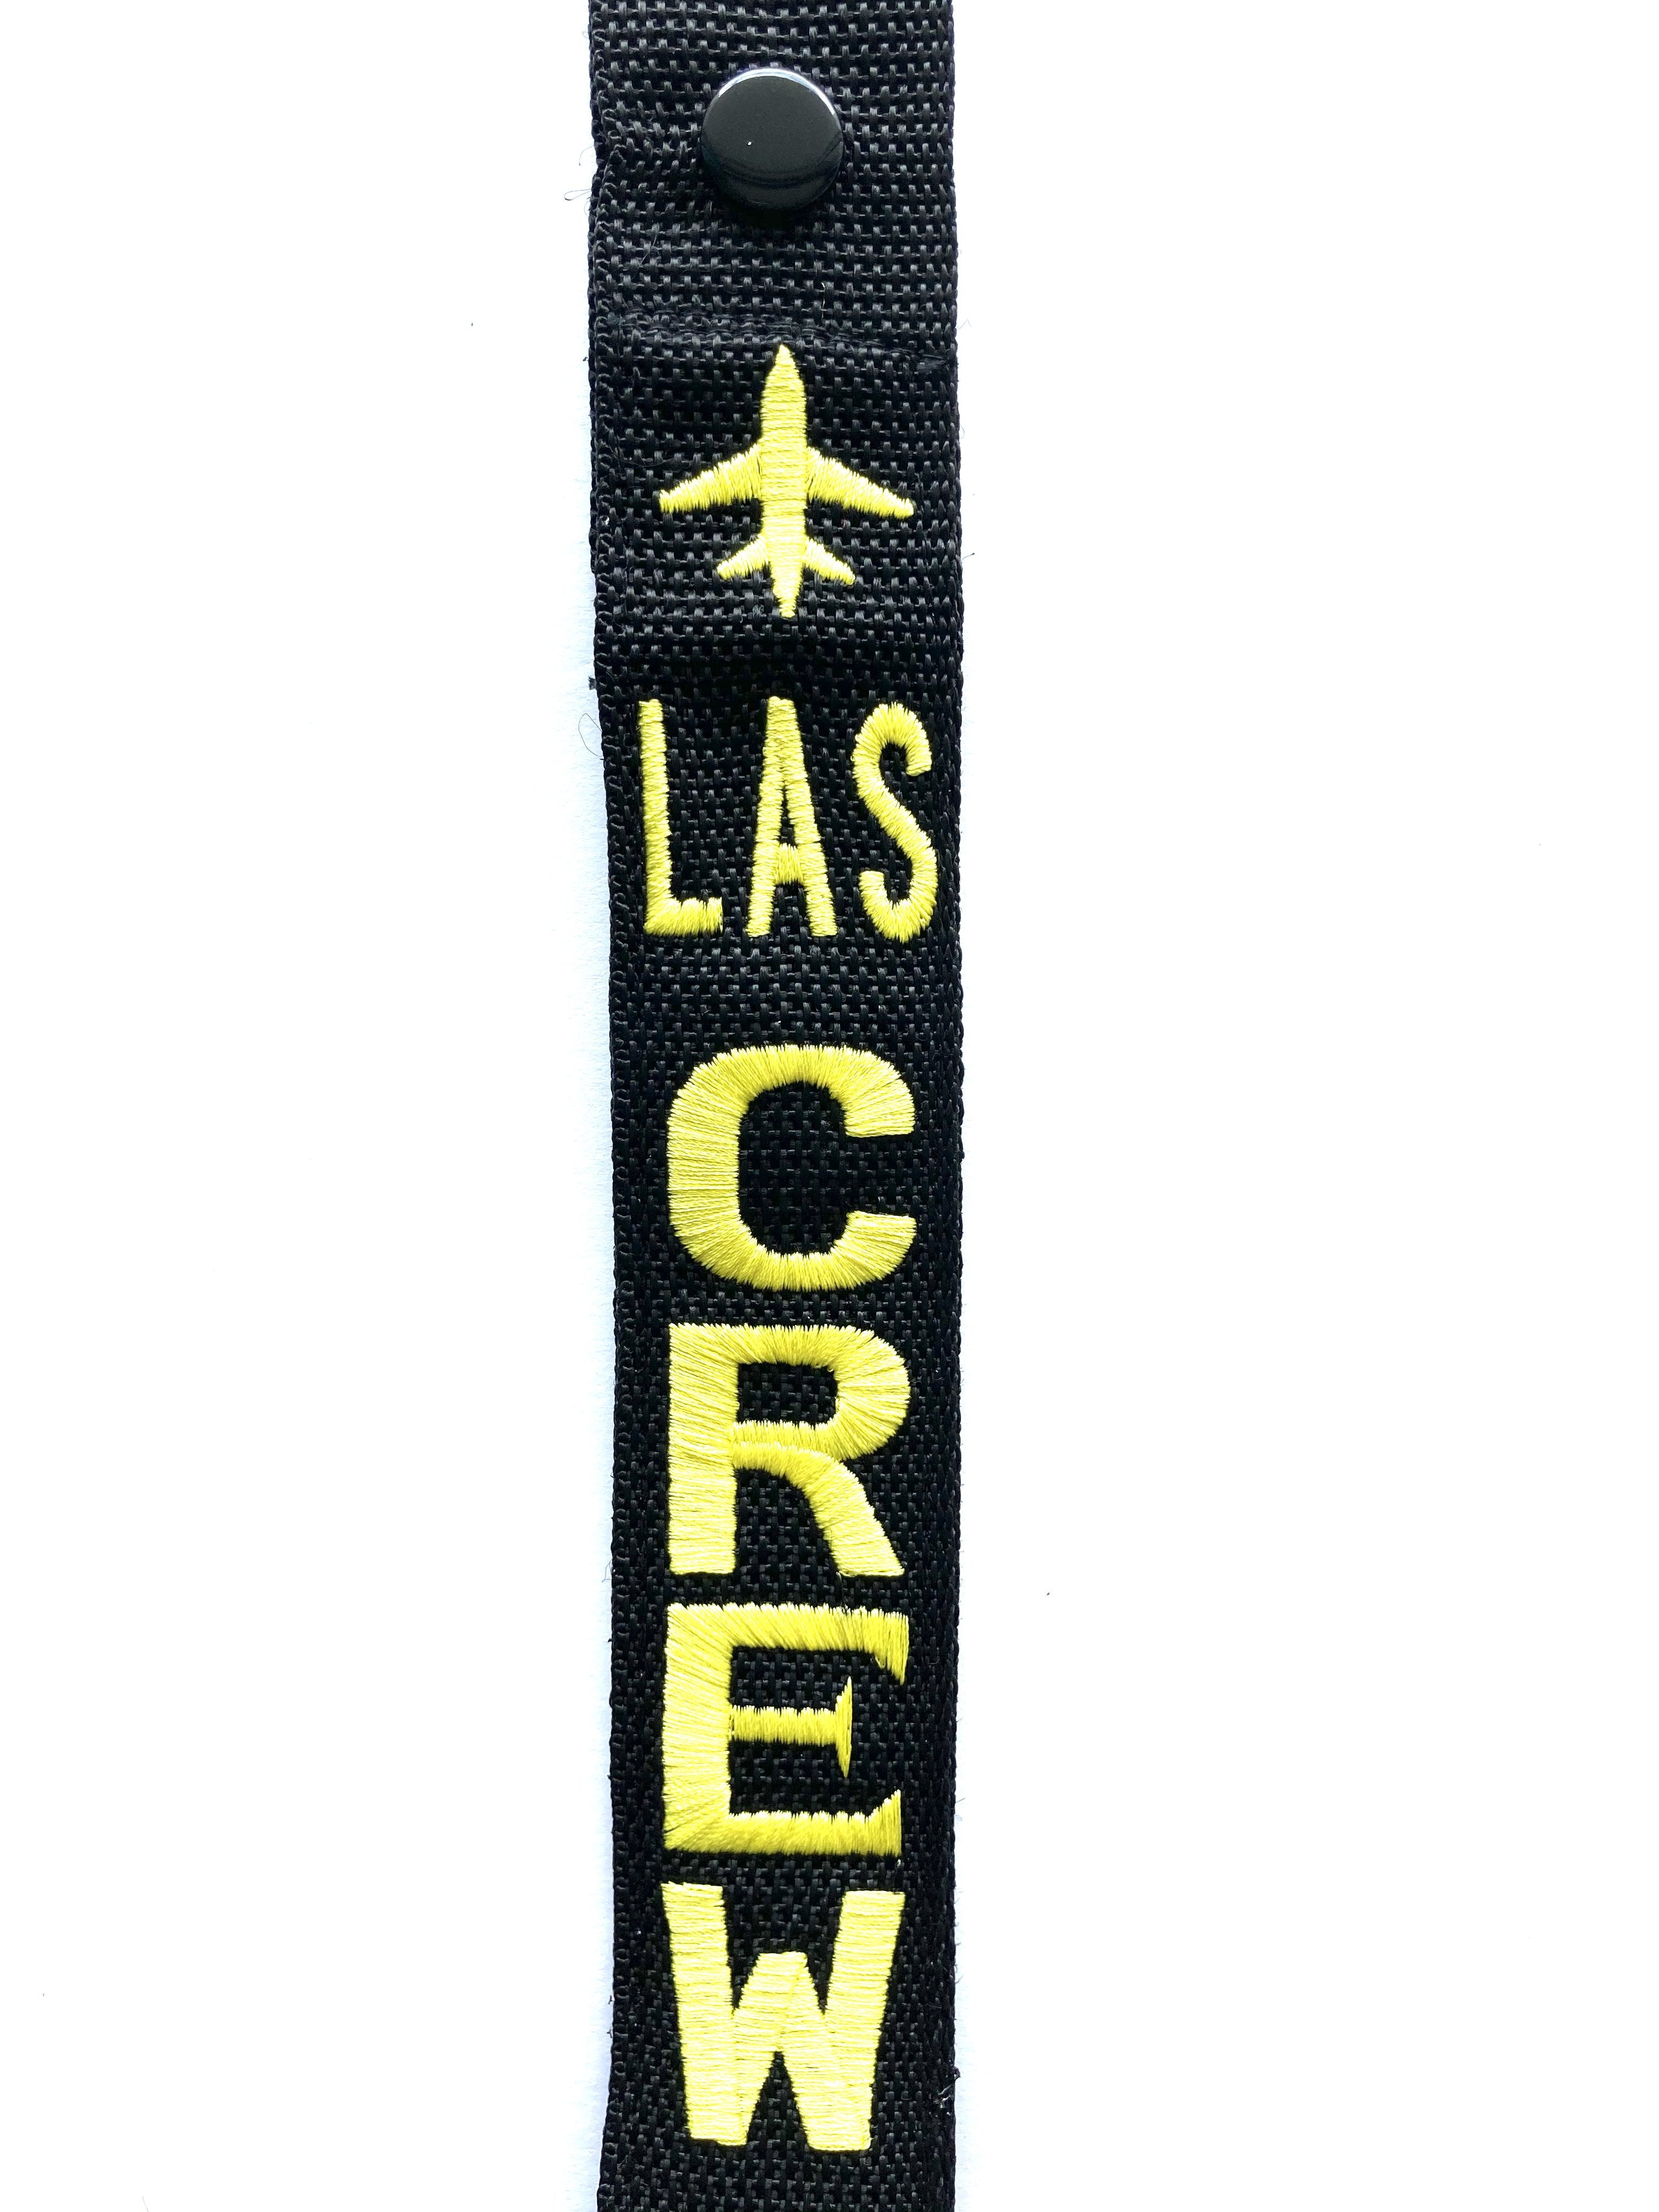 CREW Luggage Tag - LAS Yellow